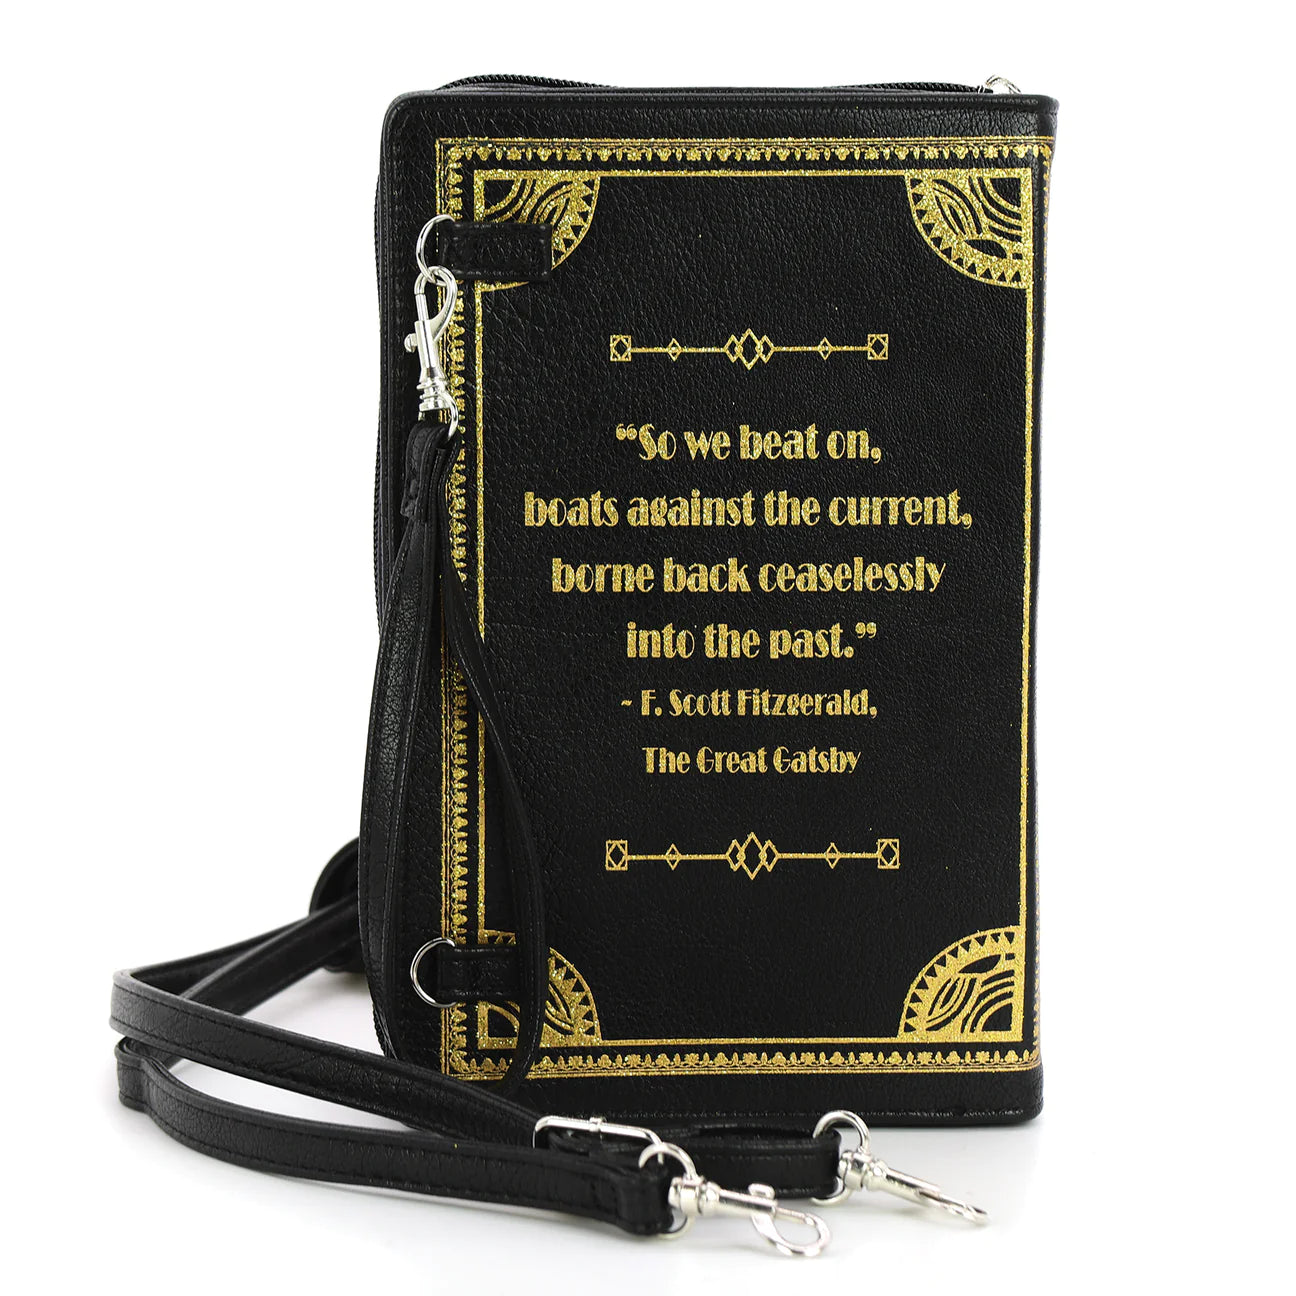 Peter Pan Book Clutch Bag : Amazon.sg: Fashion